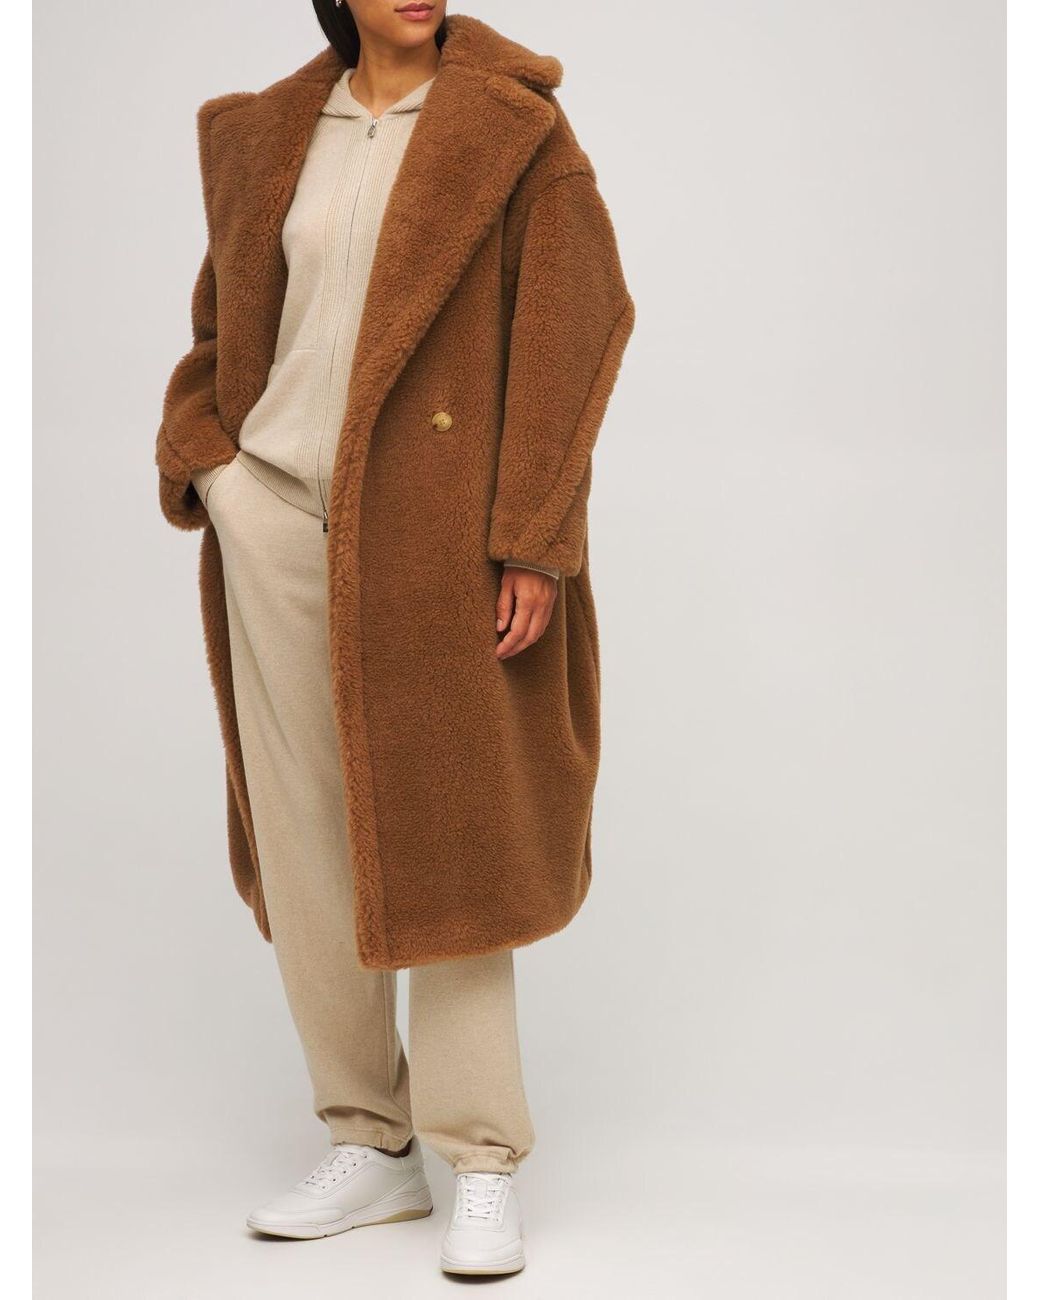 Max Mara Silk Teddy Bear Icon Coat in Camel (Natural) - Save 57% - Lyst